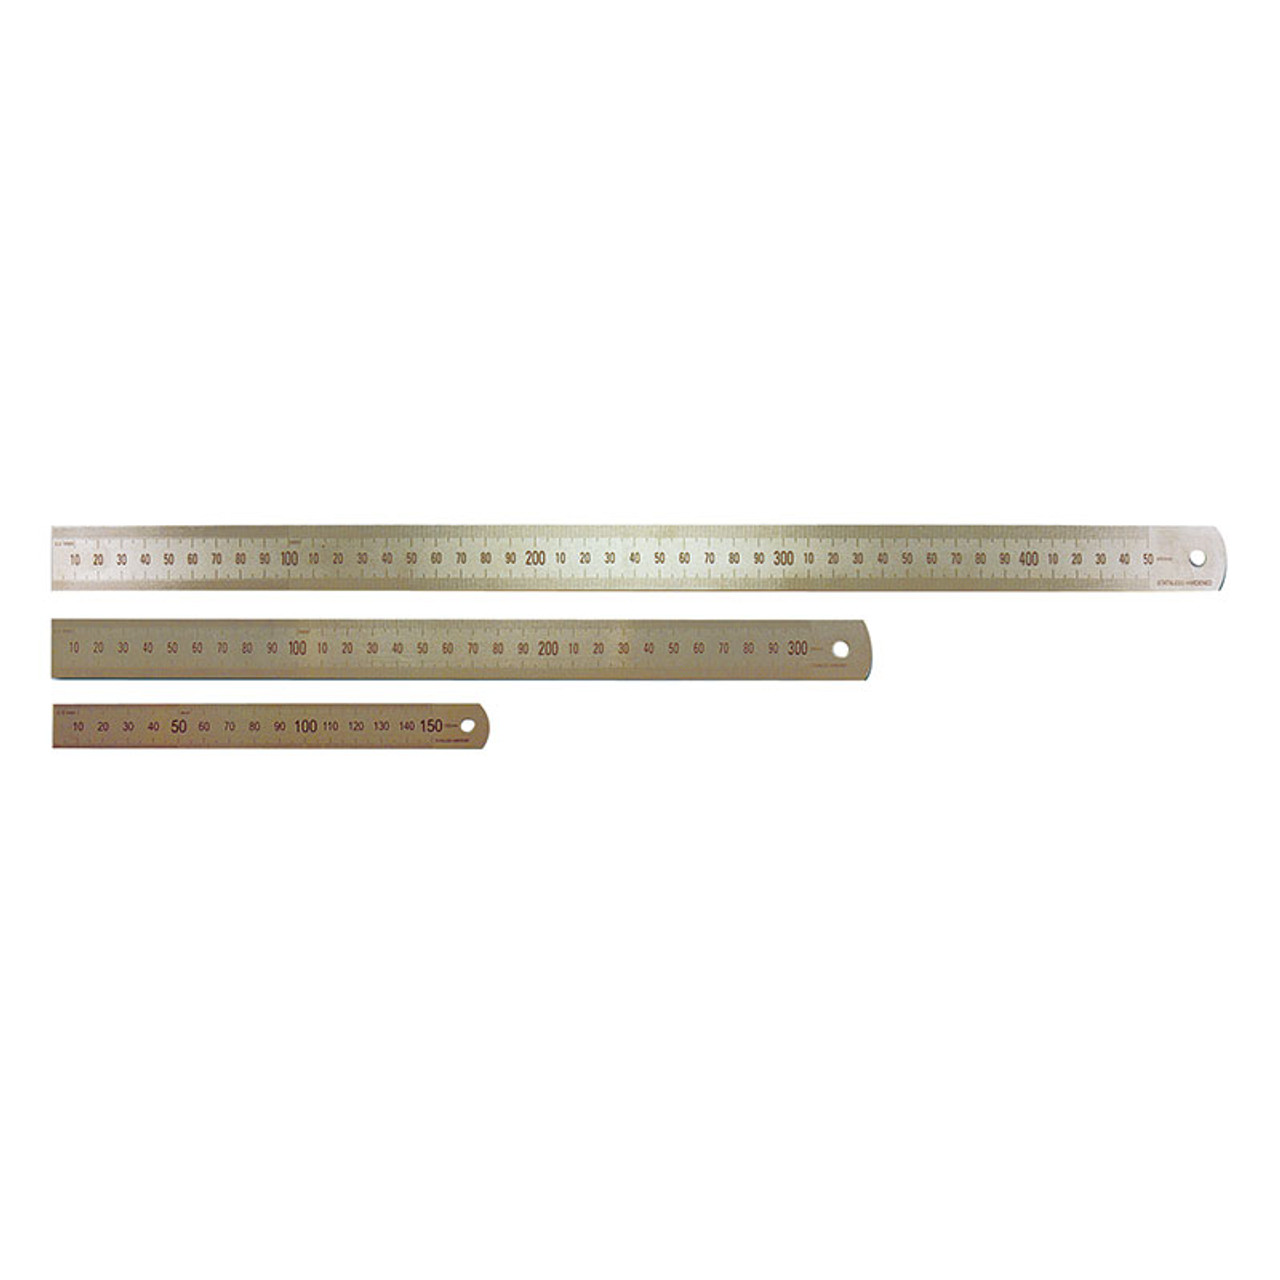 1500Mm/60In Stainless Steel Ruler - Metric/Imperial